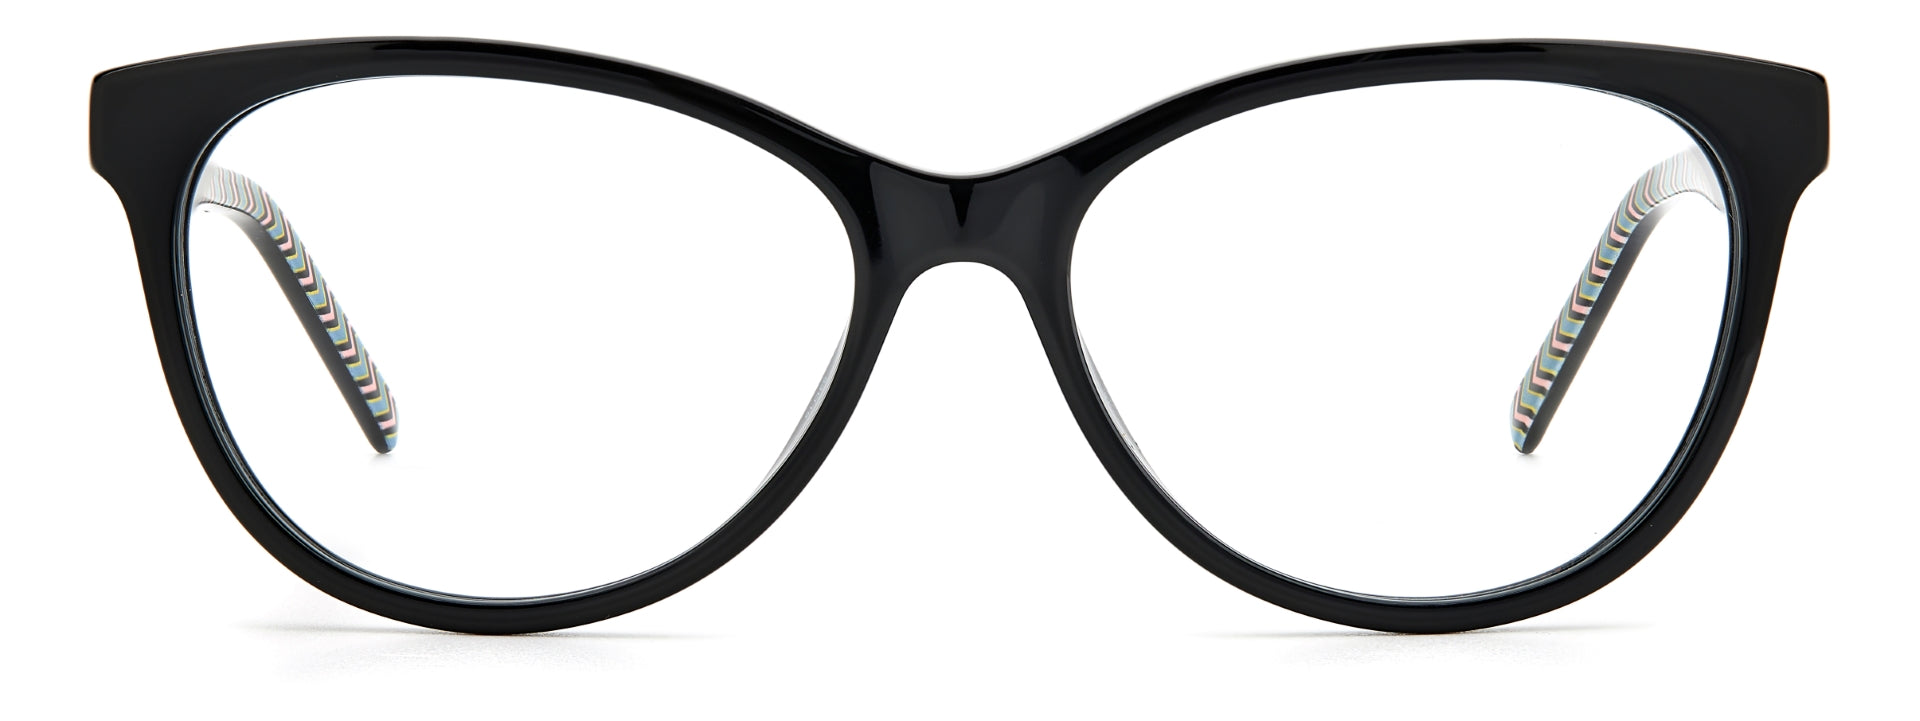 M MISSONI WOMAN ROUND Eyeglasses-MMI 0092 Size 51